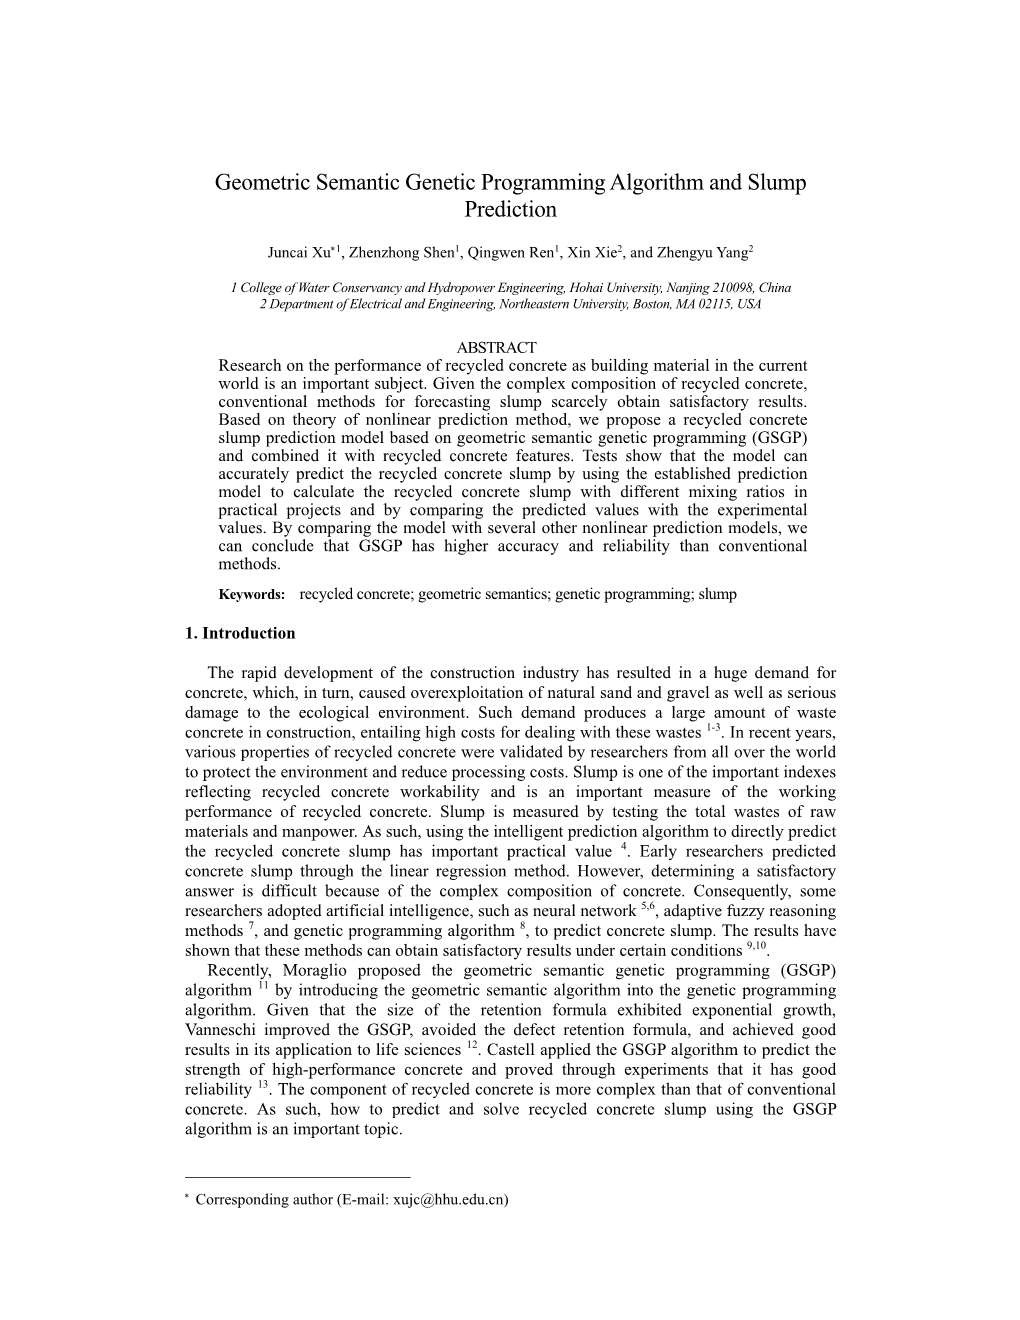 Geometric Semantic Genetic Programming Algorithm and Slump Prediction